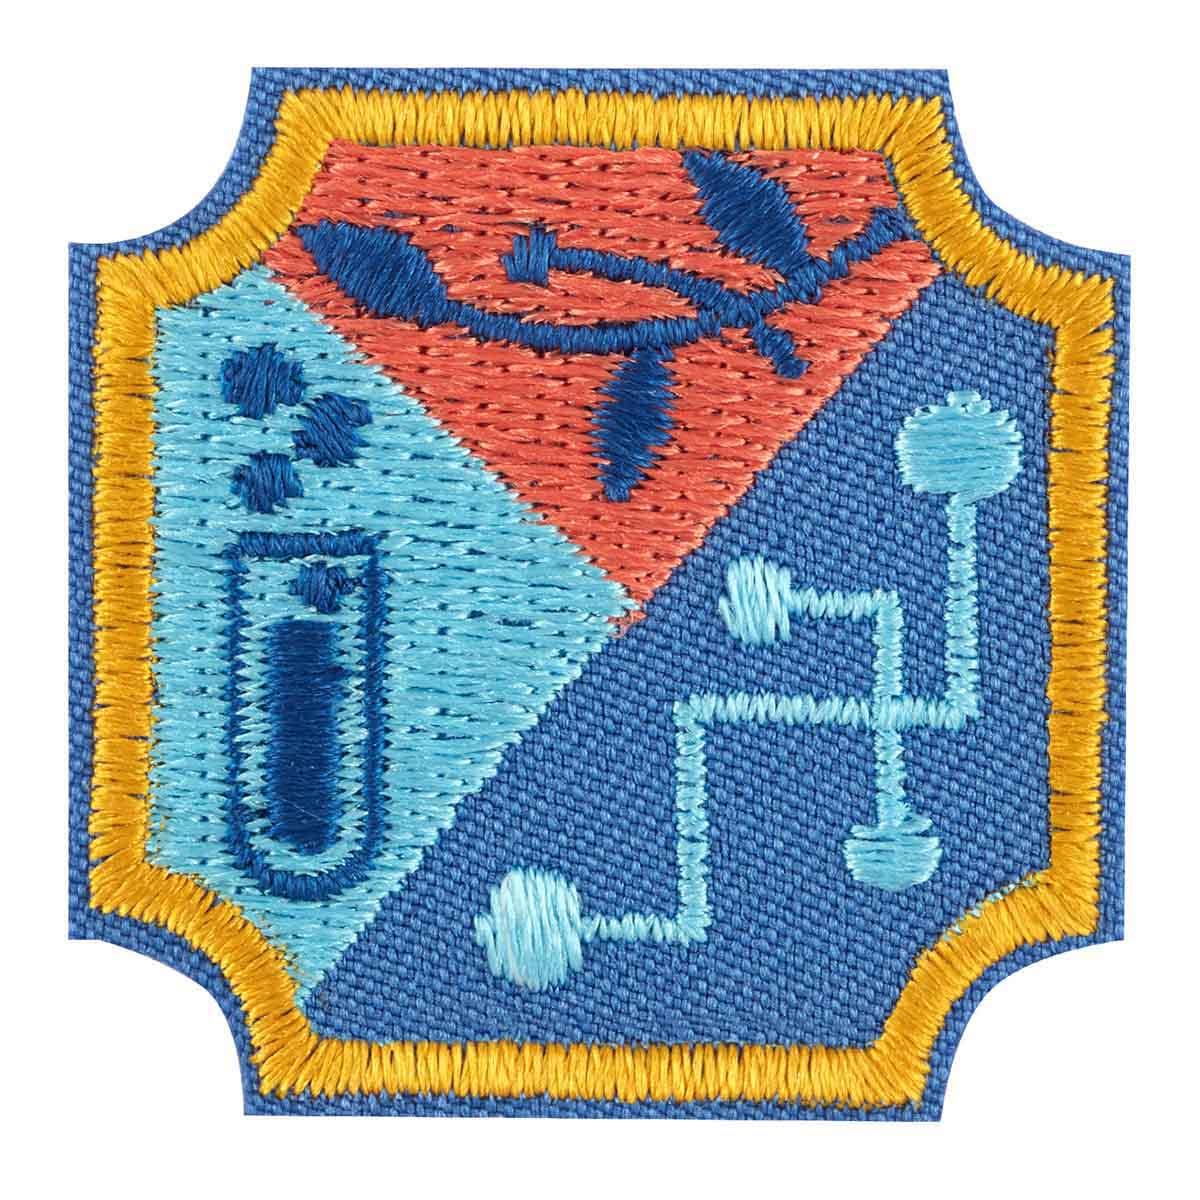 Ambassador Badges